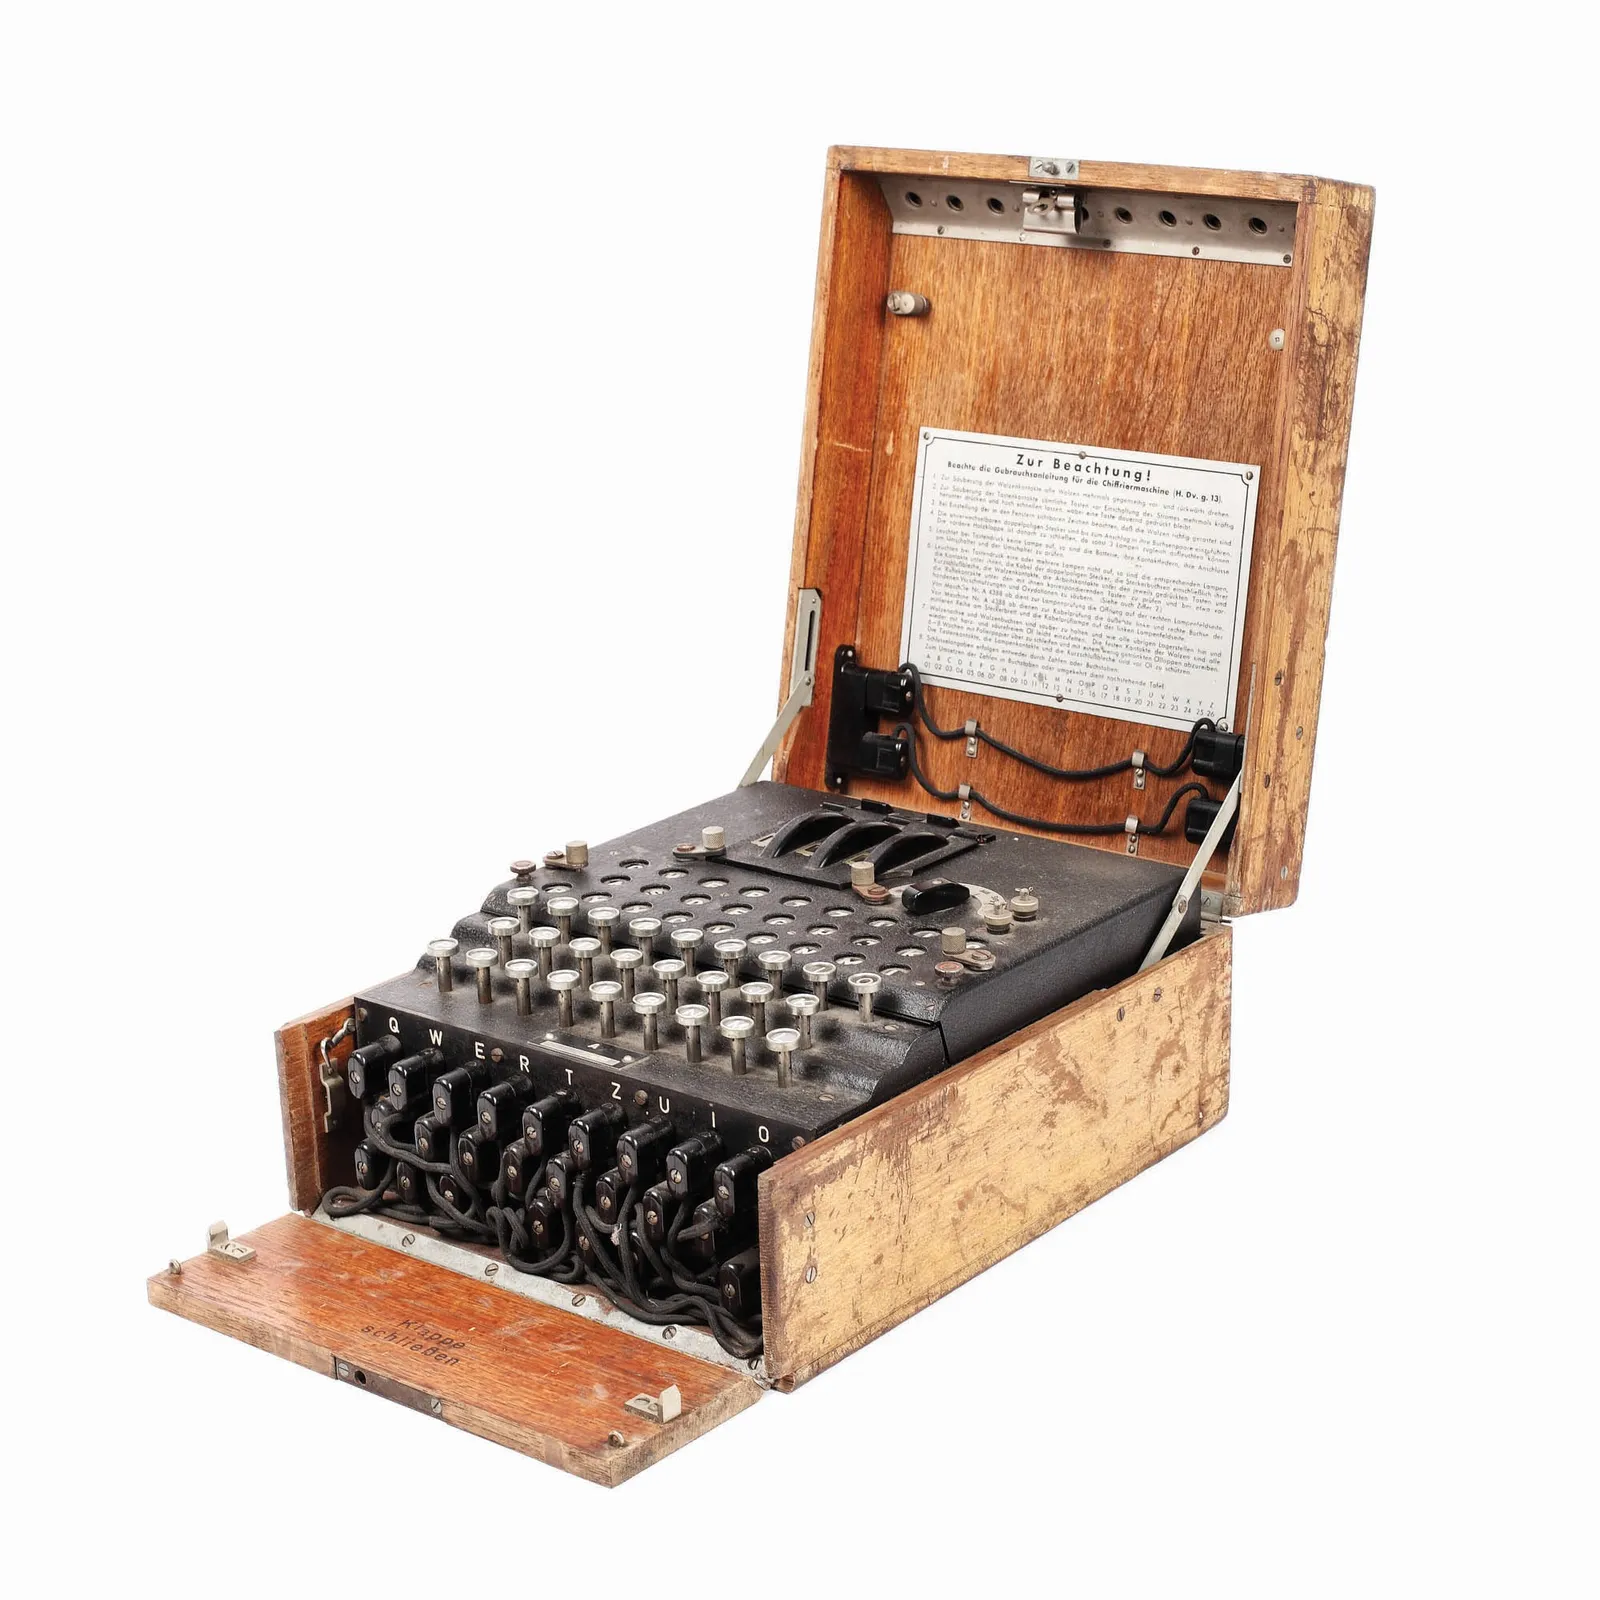 Wwii Enigma Machine Found At Flea Market Sells For 51 000 Smart News Smithsonian Magazine